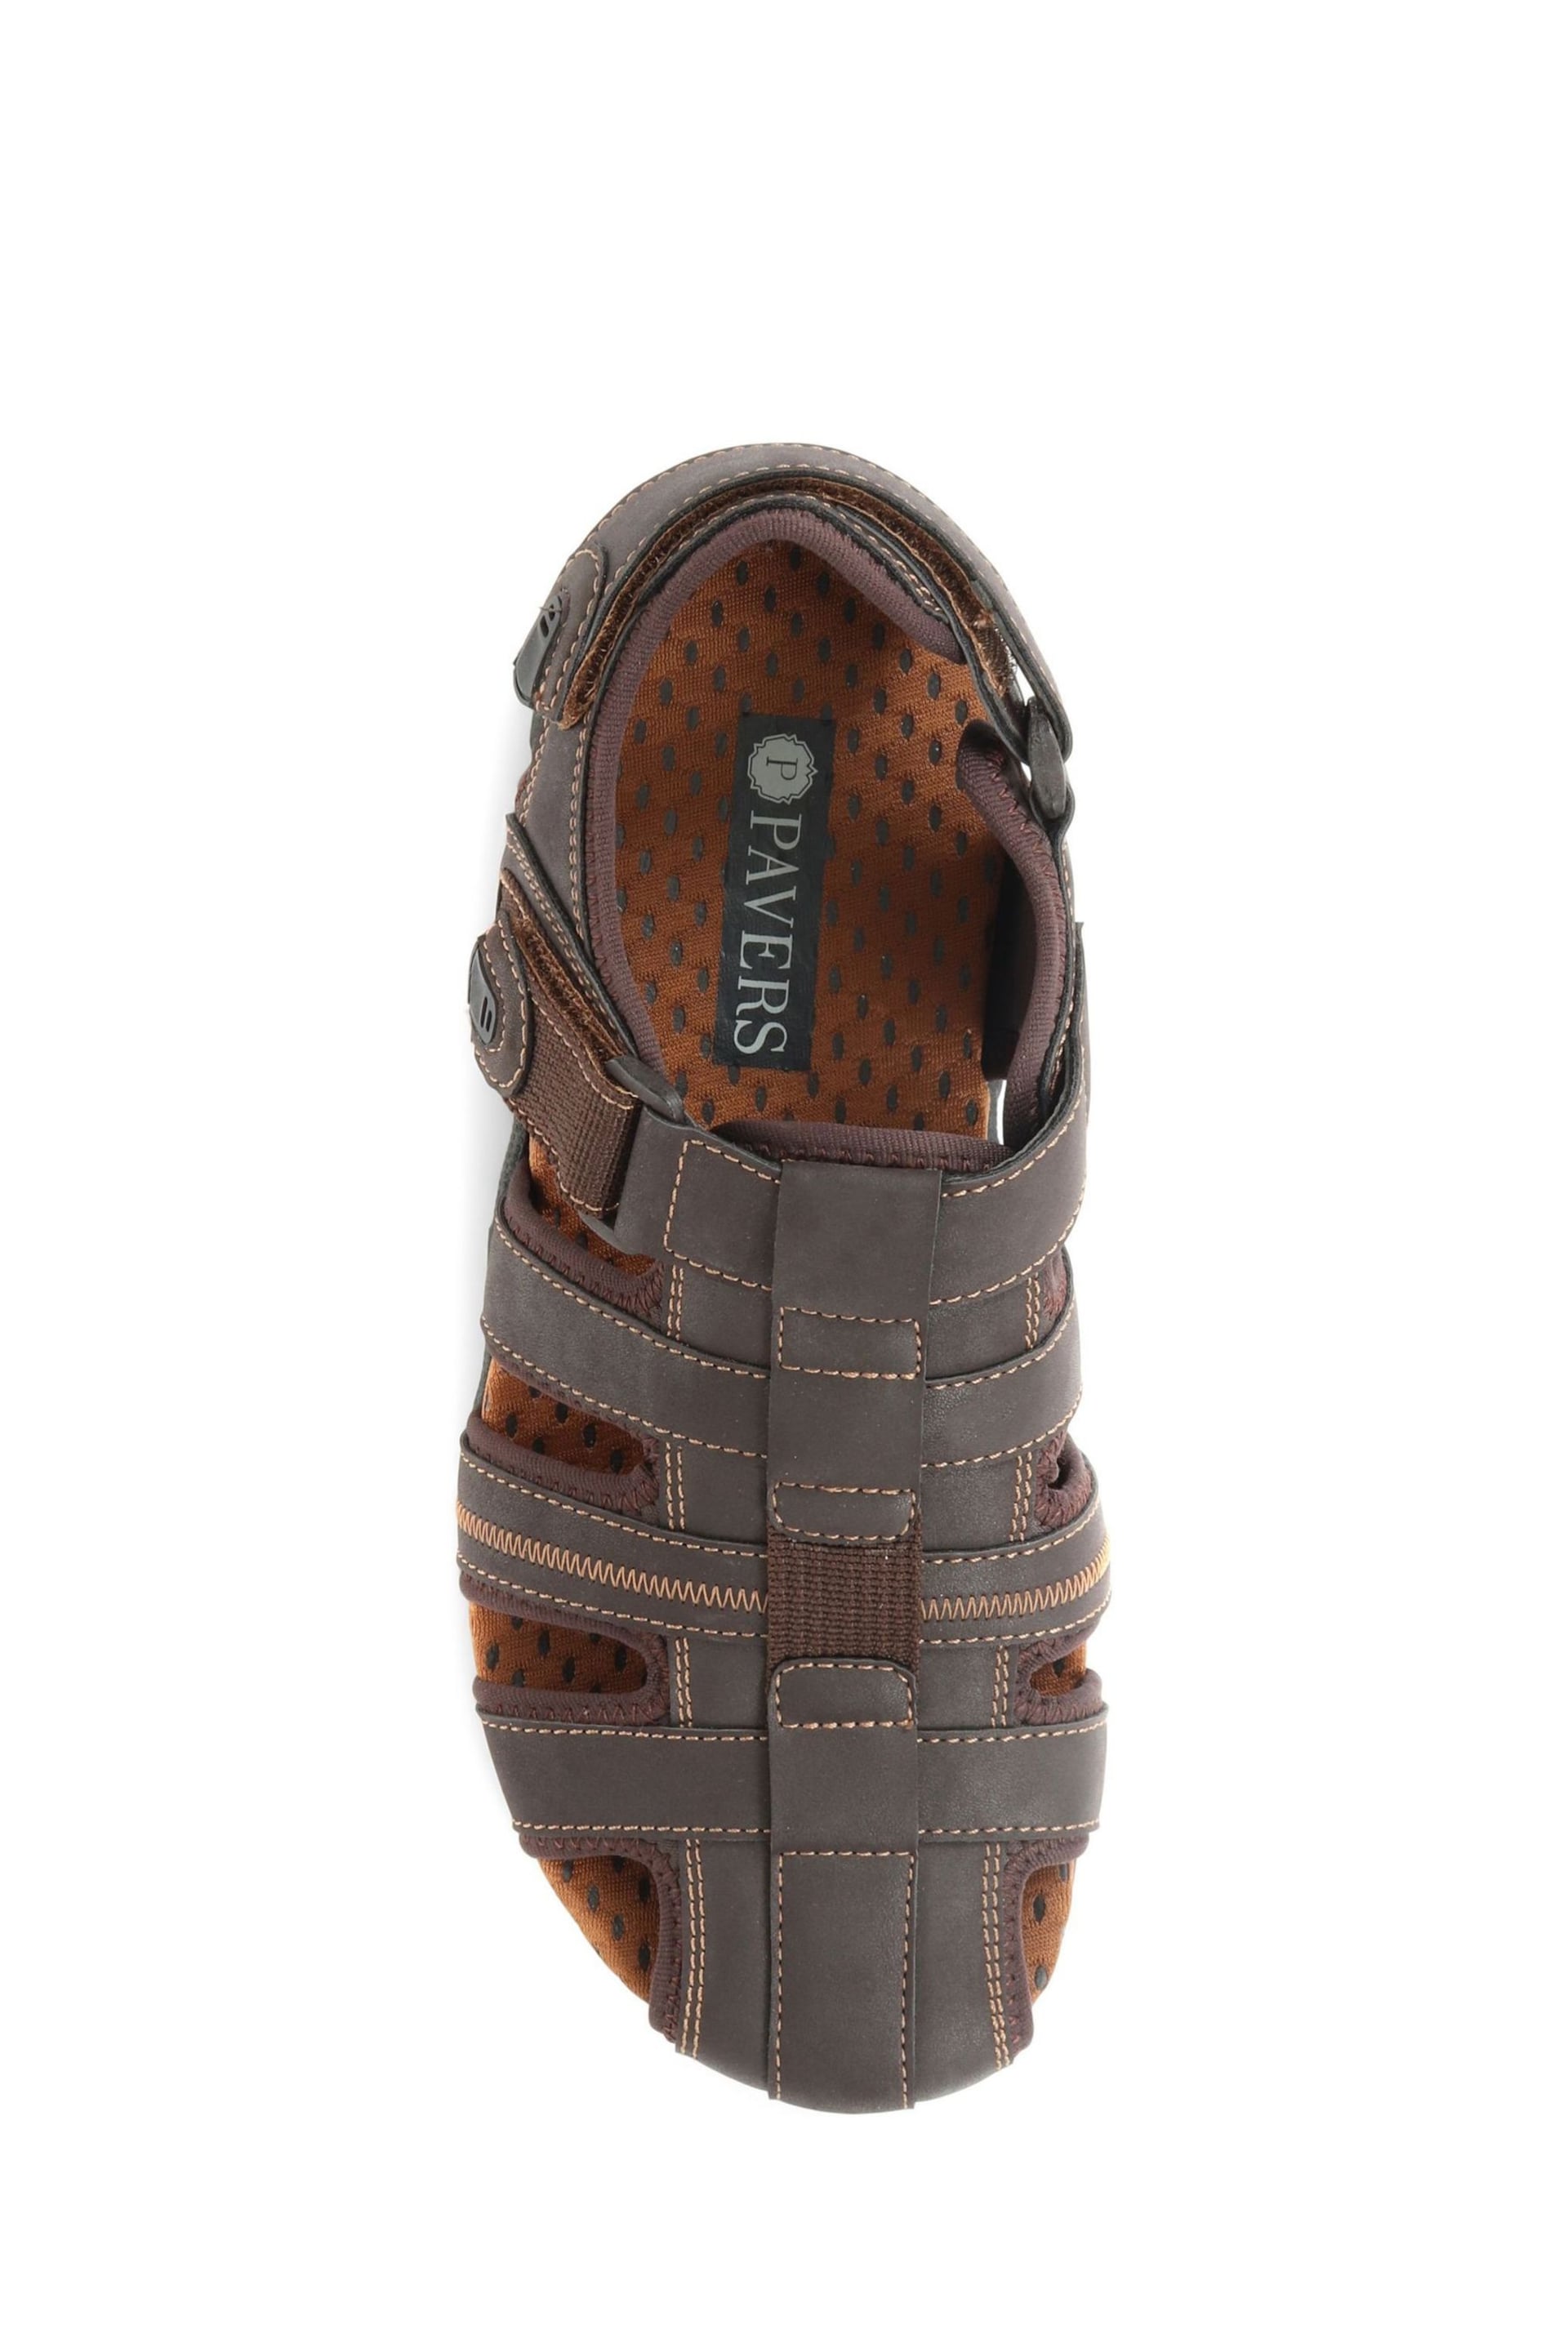 Pavers Adjustable Summer Brown Sandals - Image 5 of 5